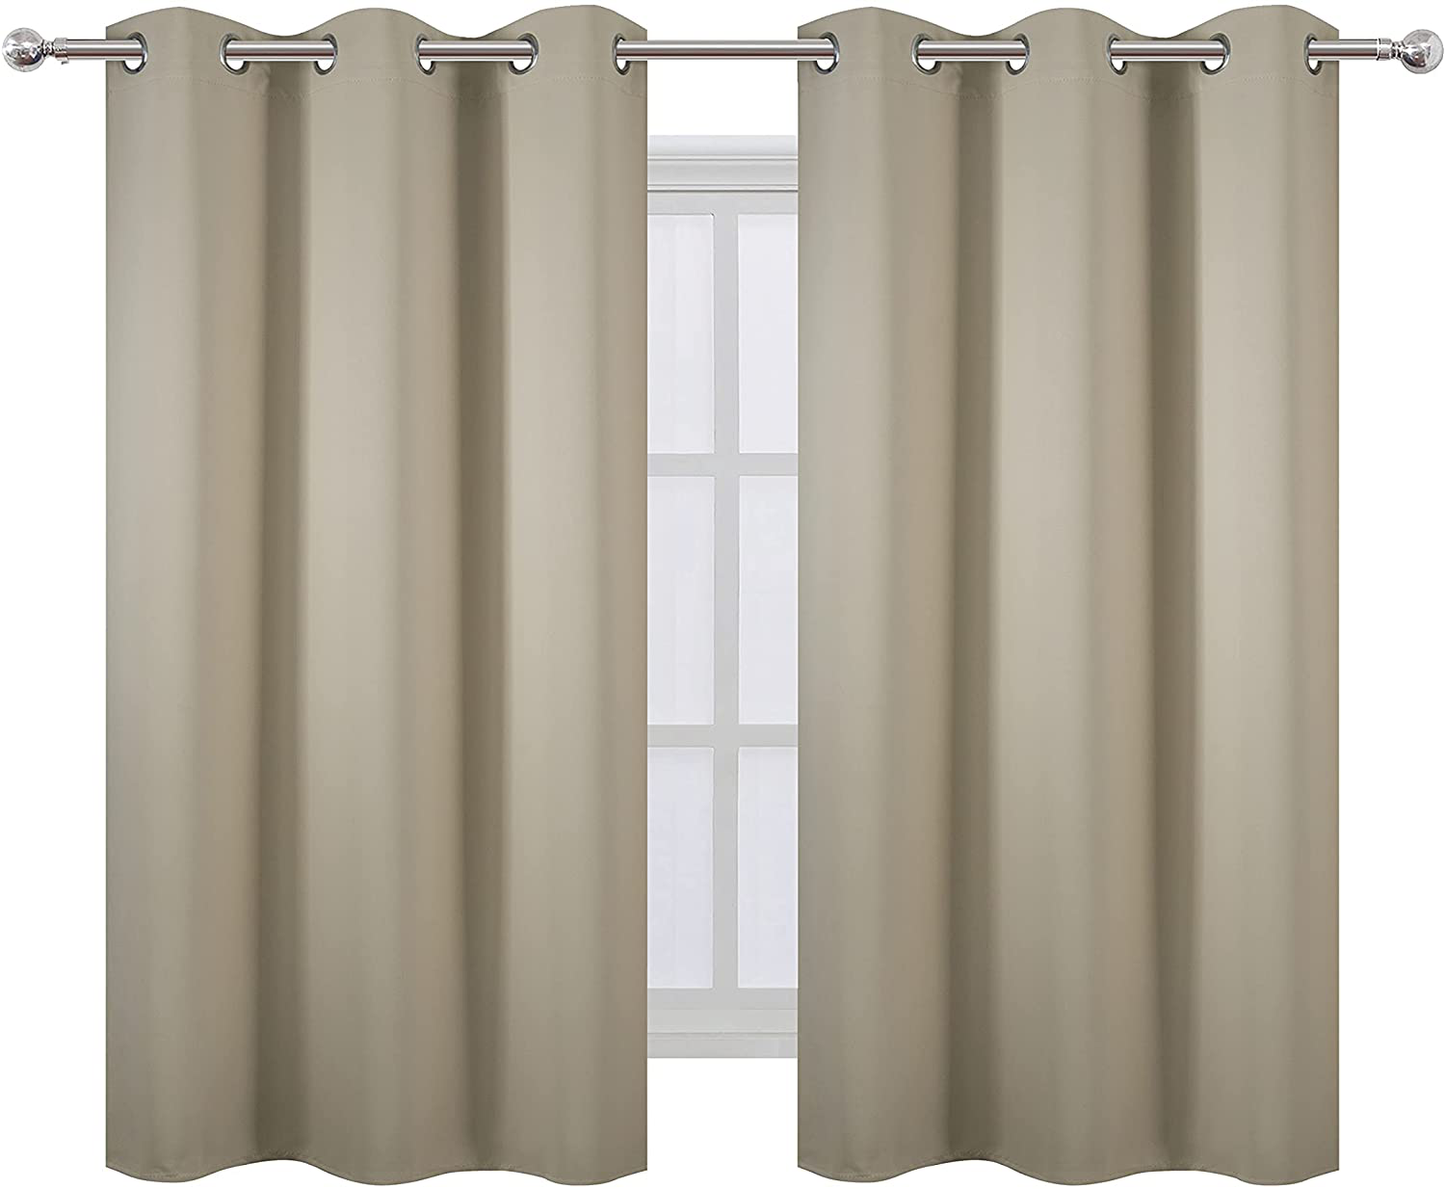 LEMOMO Beige Thermal Blackout Curtains/38 x 63 Inch/Set of 2 Panels Room Darkening Curtains for Bedroom